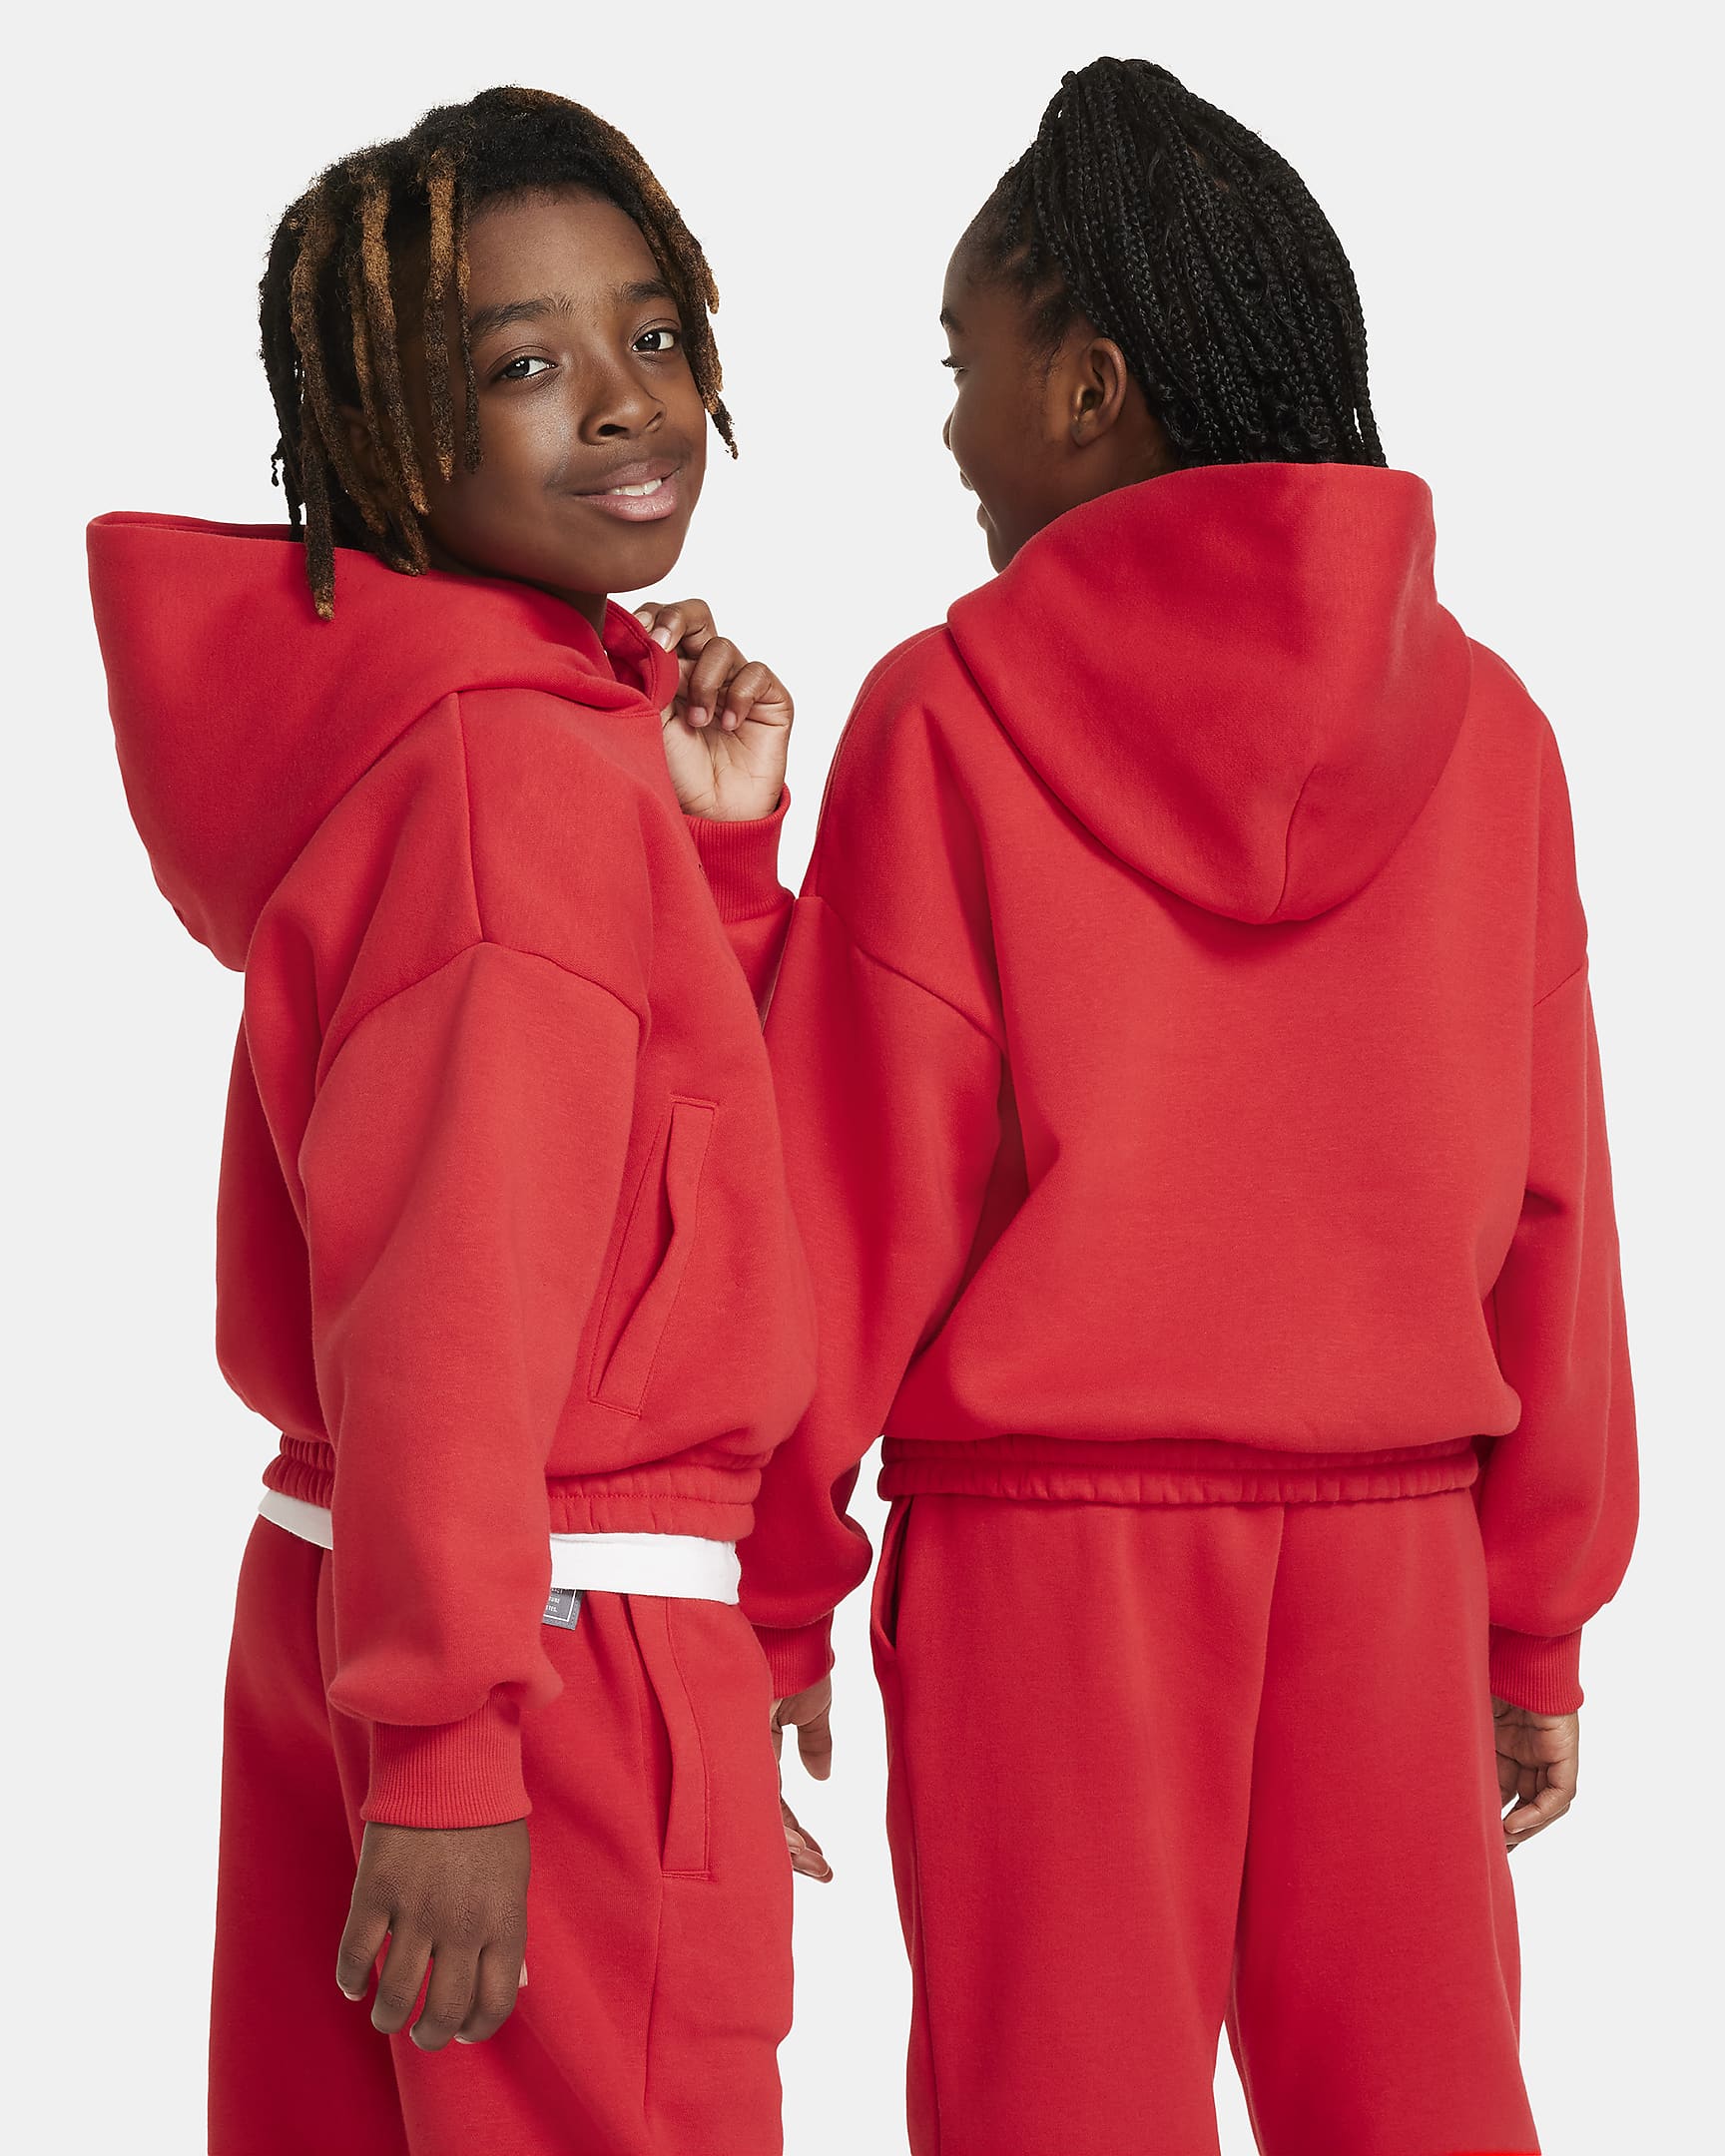 Nike Culture of Basketball Older Kids' Pullover Fleece Hoodie - University Red/White